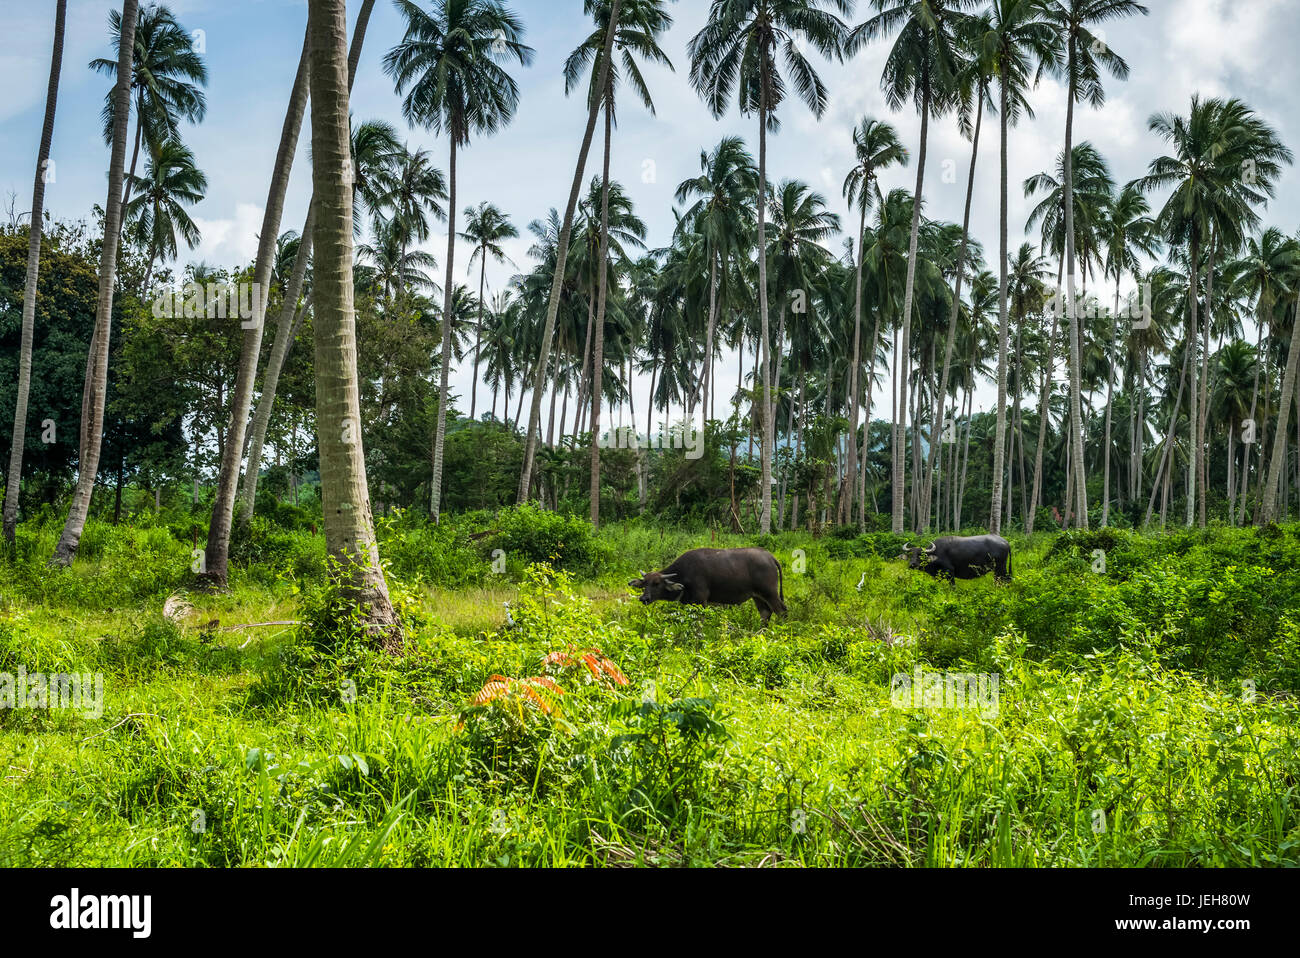 Cows grazing on lush vegetation under palm trees; Ko Samui, Chang Wat Surat Thani, Thailand Stock Photo